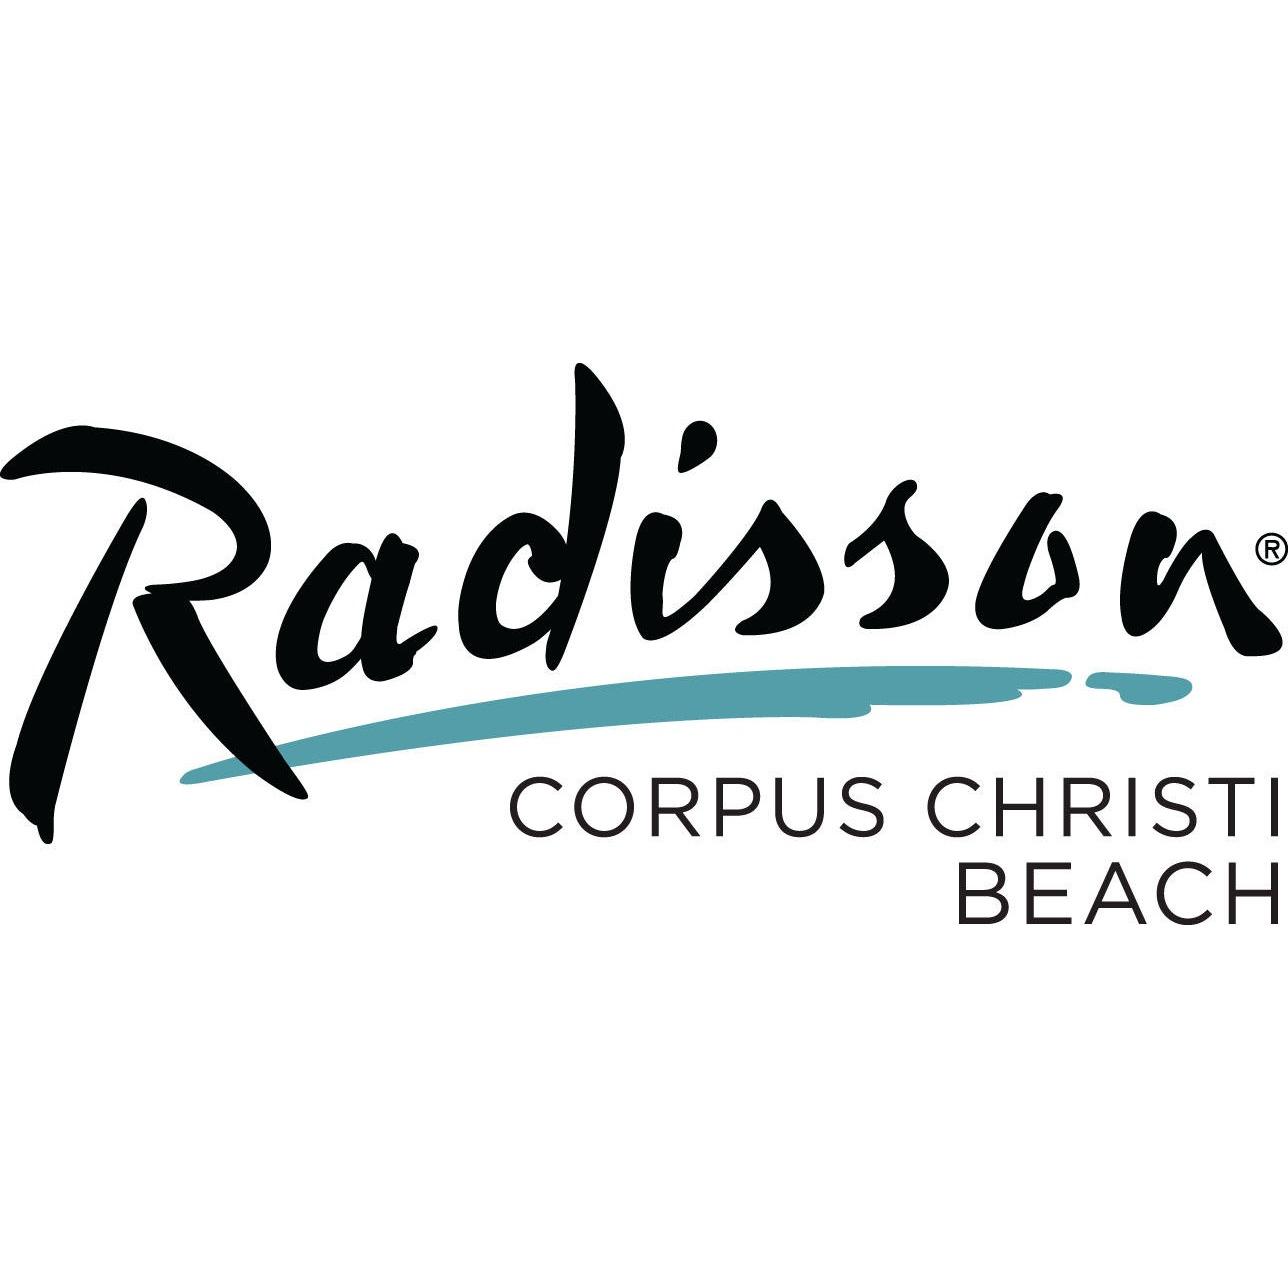 Radisson Hotel Corpus Christi Beach - Closed